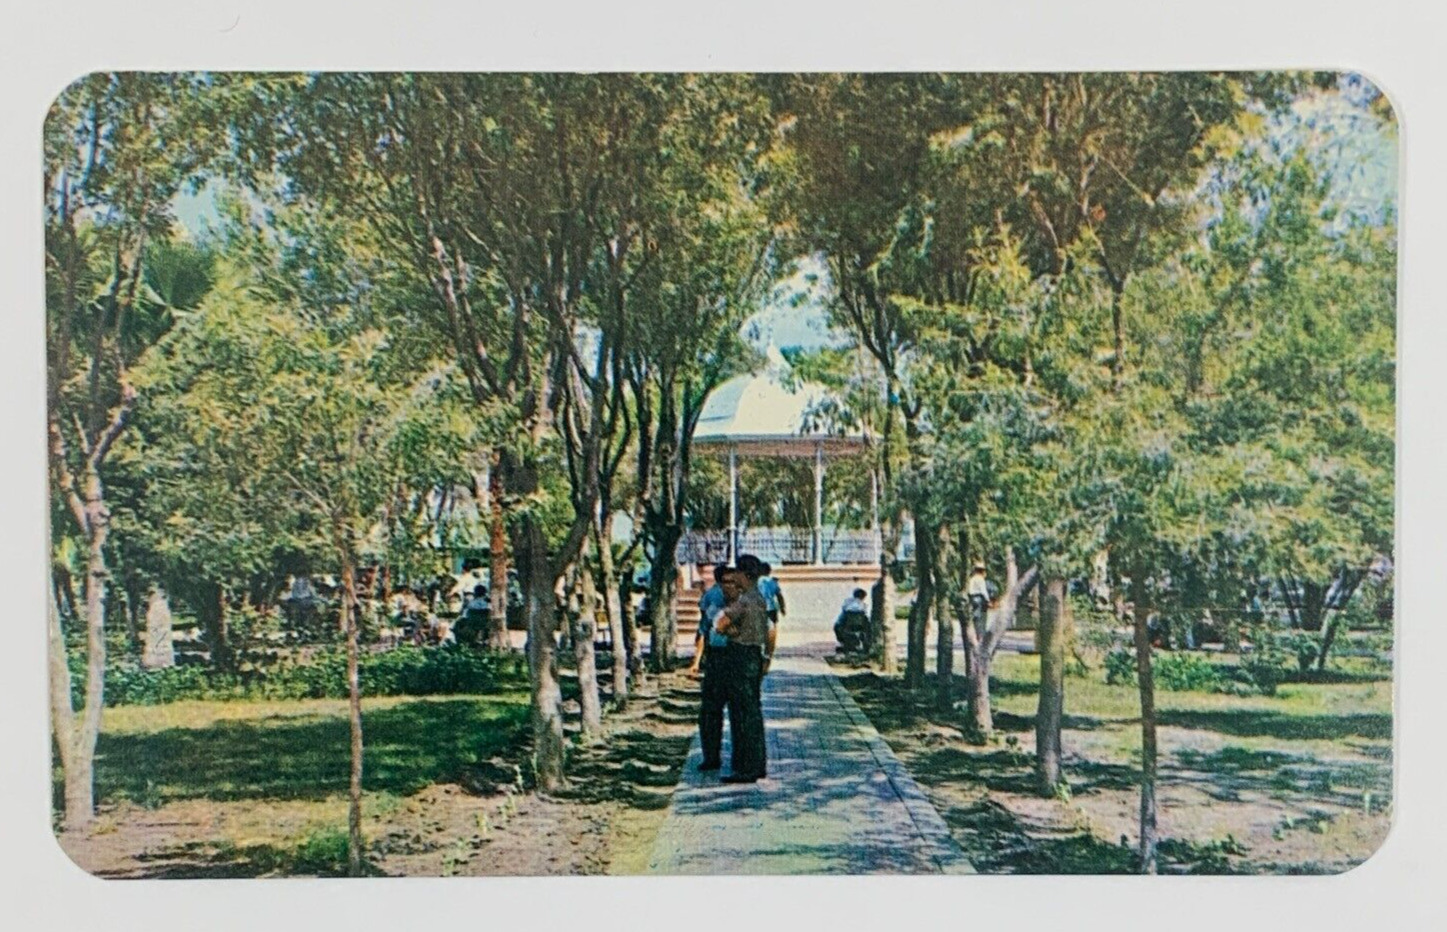 Kiosk in the Main Garden Reynosa Tamaulipas Mexico Postcard Unposted Vintage